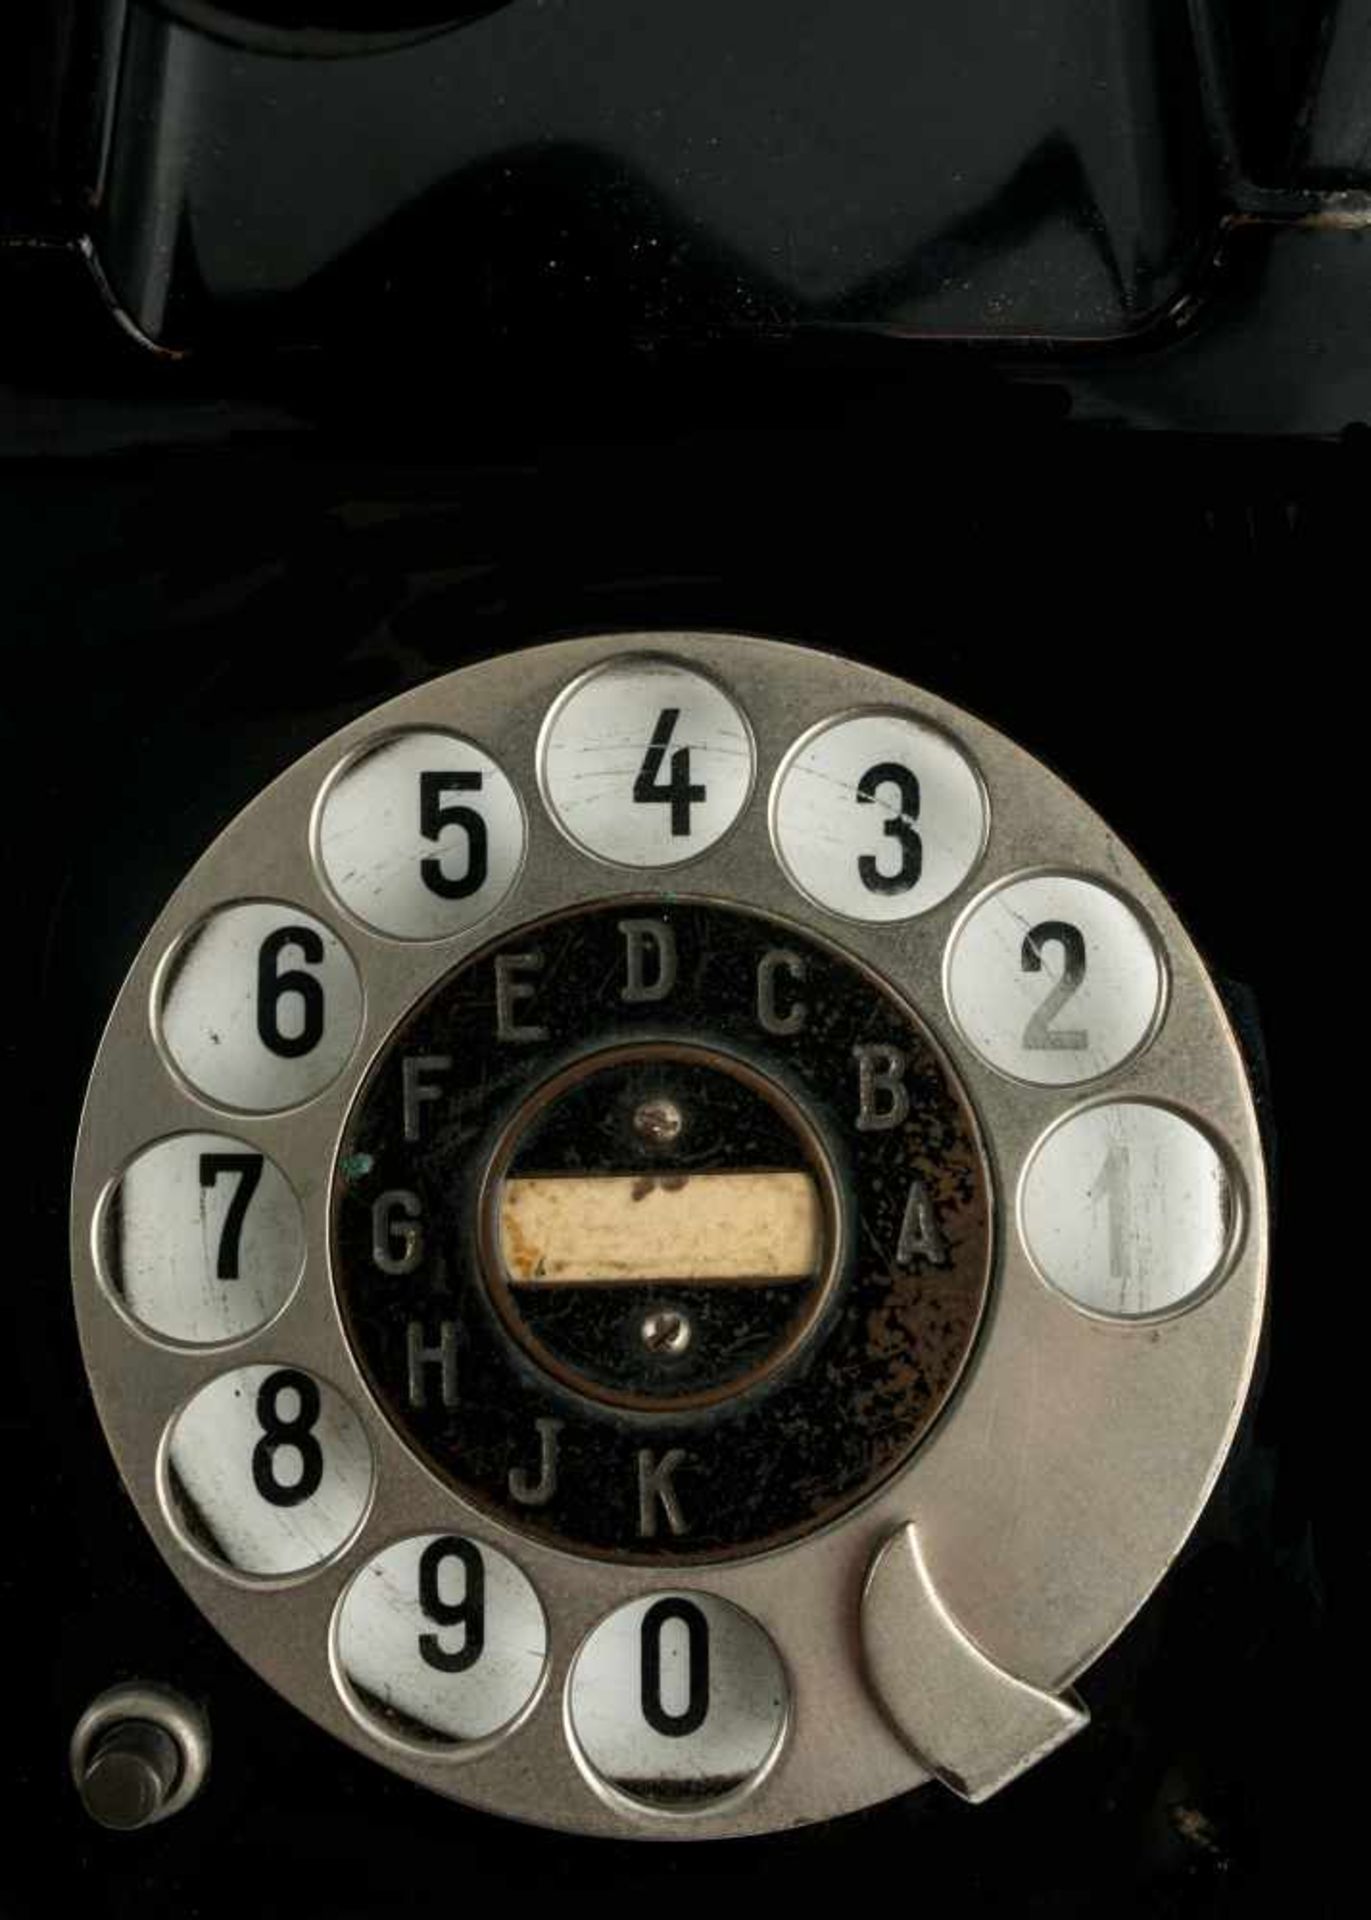 Bauhaus Dessau 'Bauhaus'-Telefon, 1929 H. 13,2 x 11,2 x 15,8 cm; Hörer: L. 24,8 cm. H. Fuld u. - Image 3 of 3